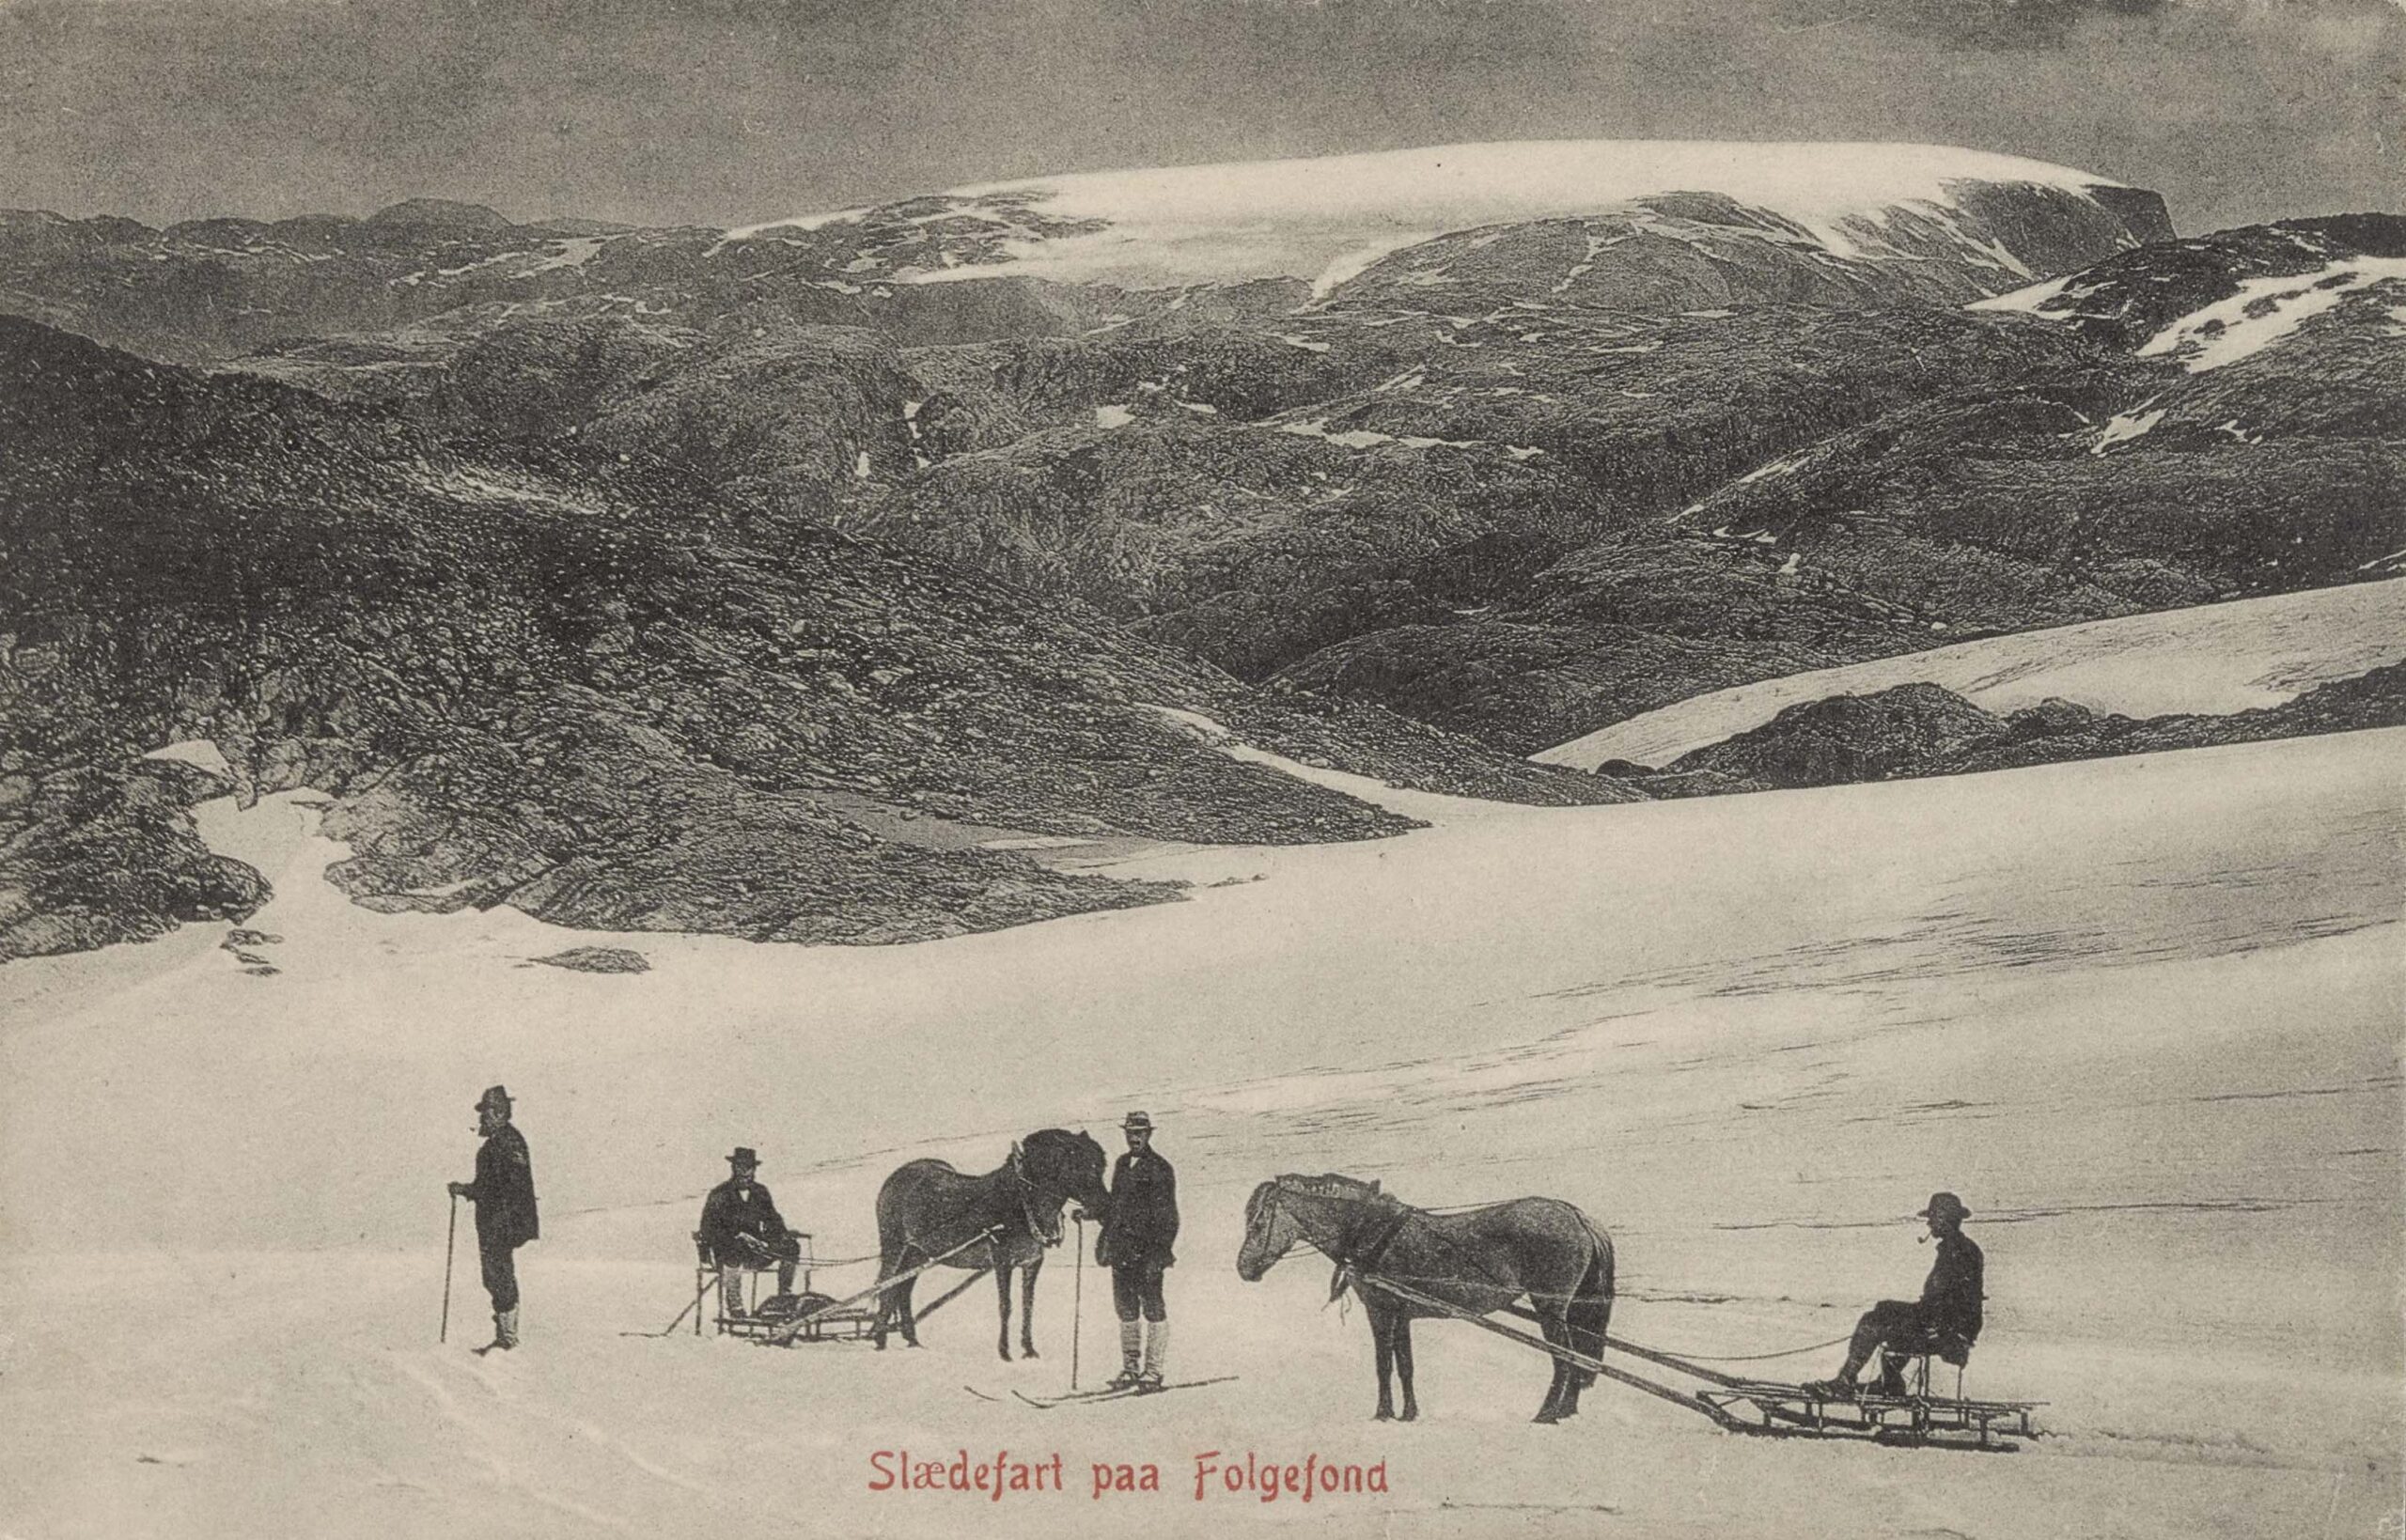 Slederit over Folgefonna, circa 1900-1910. Bron: Nationale Bibliotheek Noorwegen, documentnummer AE2000082914_0007.